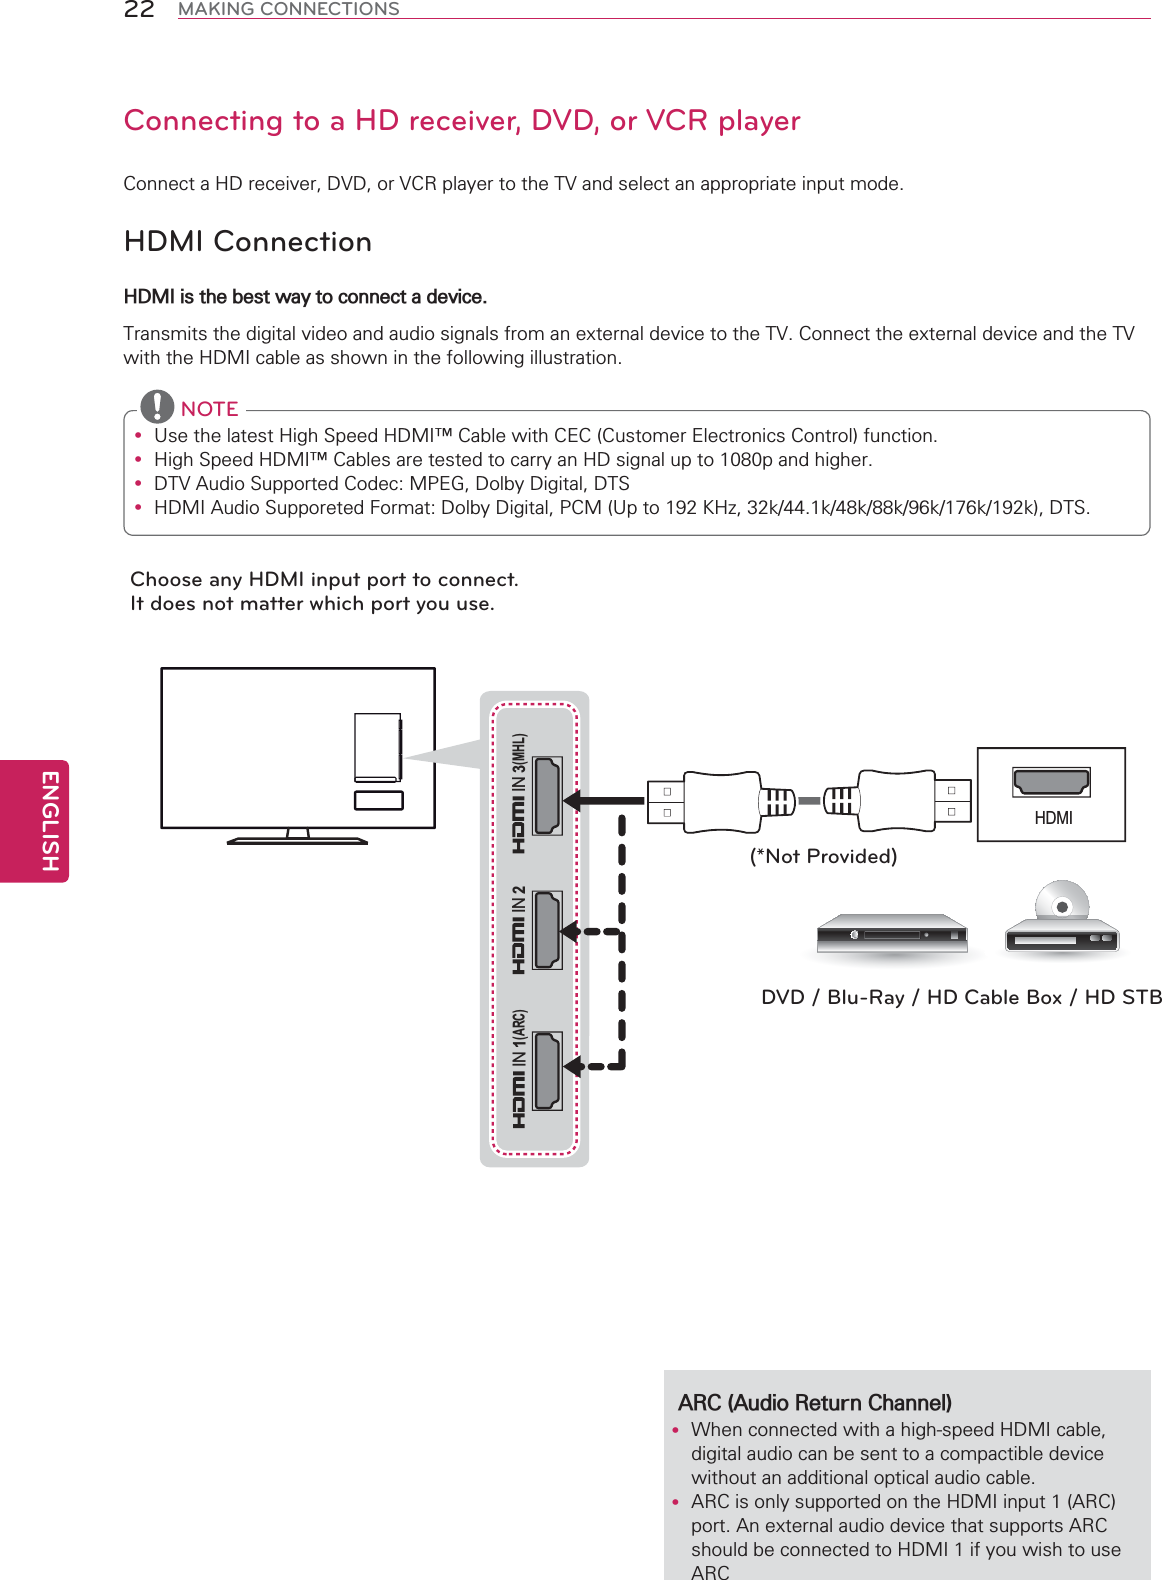 ENGLISH22 MAKING CONNECTIONSConnecting to a HD receiver, DVD, or VCR player&amp;RQQHFWD+&apos;UHFHLYHU&apos;9&apos;RU9&amp;5SOD\HUWRWKH79DQGVHOHFWDQDSSURSULDWHLQSXWPRGHHDMI Connection8%&quot;&amp;1&amp;&apos;.#97UDQVPLWVWKHGLJLWDOYLGHRDQGDXGLRVLJQDOVIURPDQH[WHUQDOGHYLFHWRWKH79&amp;RQQHFWWKHH[WHUQDOGHYLFHDQGWKH79ZLWKWKH+&apos;0,FDEOHDVVKRZQLQWKHIROORZLQJLOOXVWUDWLRQy 8VHWKHODWHVW+LJK6SHHG+&apos;0,Î&amp;DEOHZLWK&amp;(&amp;&amp;XVWRPHU(OHFWURQLFV&amp;RQWUROIXQFWLRQy +LJK6SHHG+&apos;0,Î&amp;DEOHVDUHWHVWHGWRFDUU\DQ+&apos;VLJQDOXSWRSDQGKLJKHUy &apos;79$XGLR6XSSRUWHG&amp;RGHF03(*&apos;ROE\&apos;LJLWDO&apos;76y +&apos;0,$XGLR6XSSRUHWHG)RUPDW&apos;ROE\&apos;LJLWDO3&amp;08SWR.+]NNNNNNN&apos;76 NOTE+,y :KHQFRQQHFWHGZLWKDKLJKVSHHG+&apos;0,FDEOHGLJLWDODXGLRFDQEHVHQWWRDFRPSDFWLEOHGHYLFHZLWKRXWDQDGGLWLRQDORSWLFDODXGLRFDEOHy $5&amp;LVRQO\VXSSRUWHGRQWKH+&apos;0,LQSXW$5&amp;SRUW$QH[WHUQDODXGLRGHYLFHWKDWVXSSRUWV$5&amp;VKRXOGEHFRQQHFWHGWR+&apos;0,LI\RXZLVKWRXVH$5&amp;IN 1  (ARC) IN 3  (MHL) IN 2HDMIDVD / Blu-Ray / HD Cable Box / HD STBChoose any HDMI input port to connect. It does not matter which port you use.(*Not Provided)